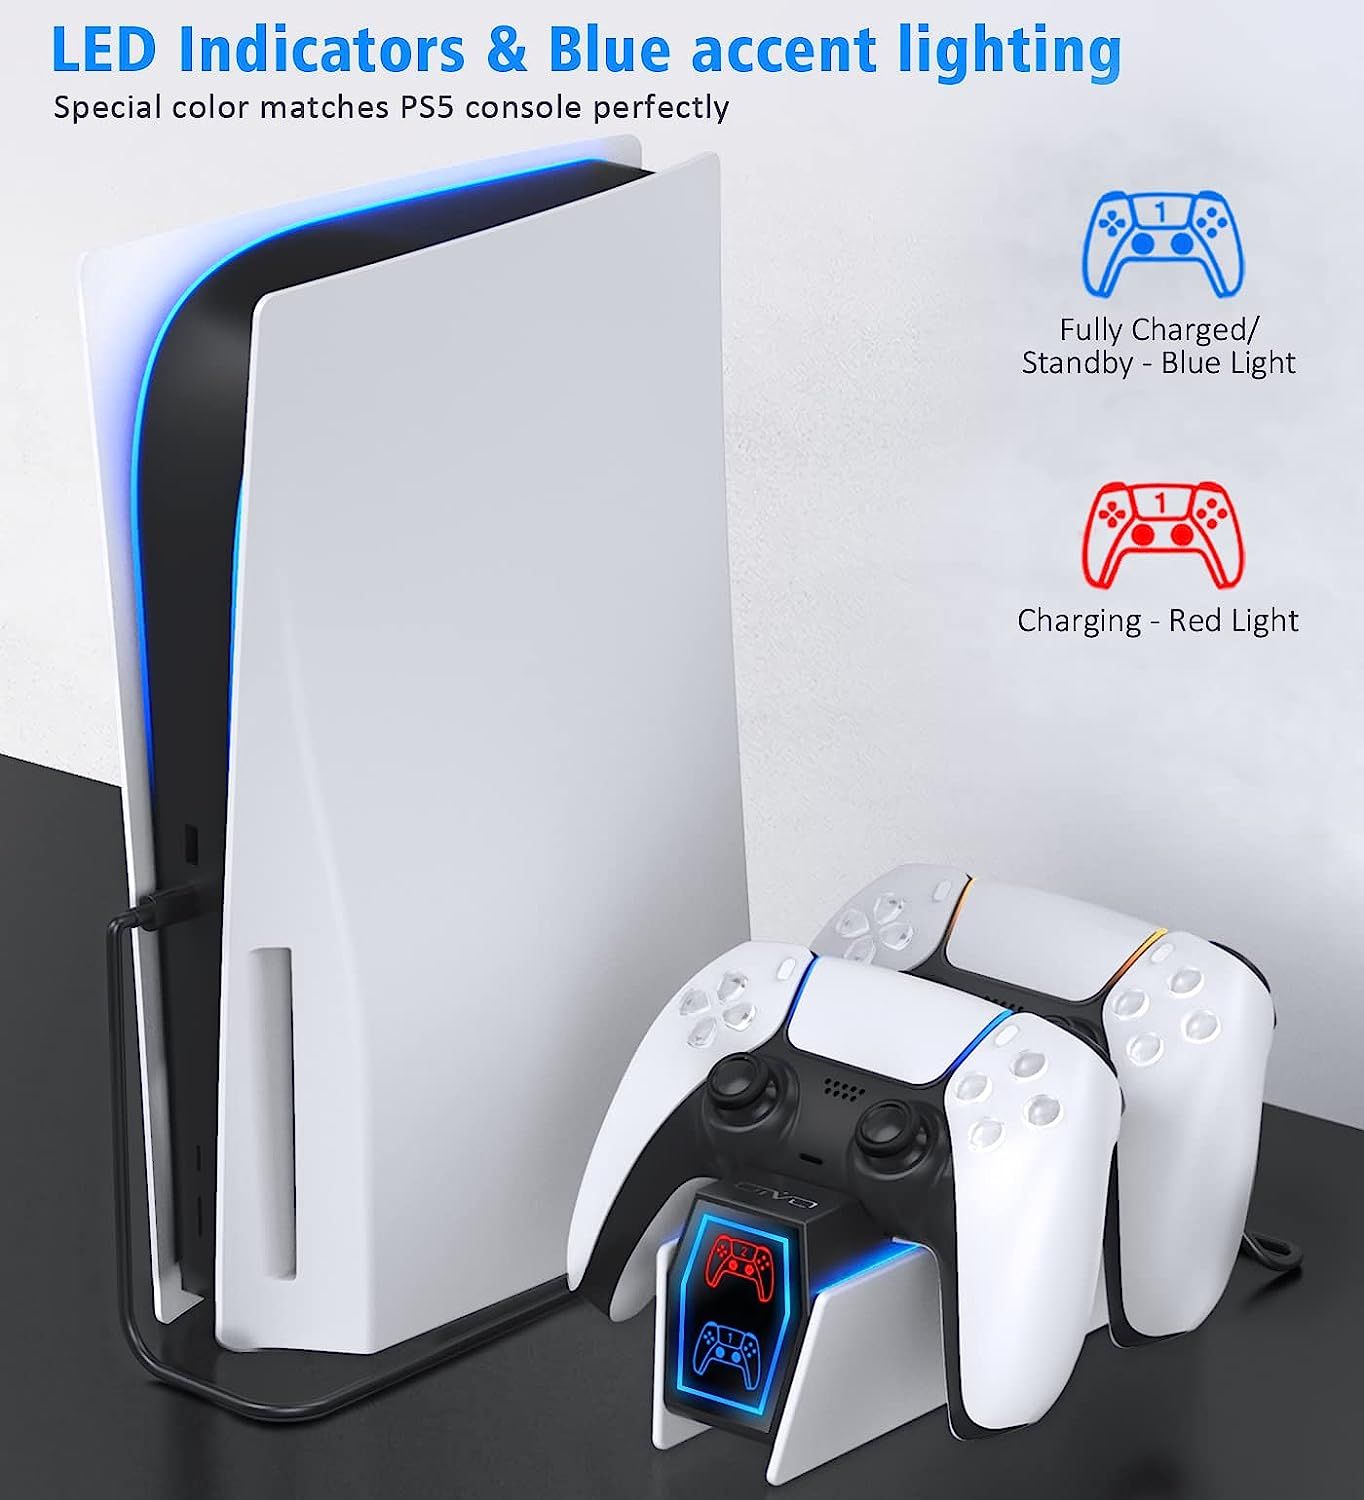 Dualsense Charging Station For Playstation 5 : Target